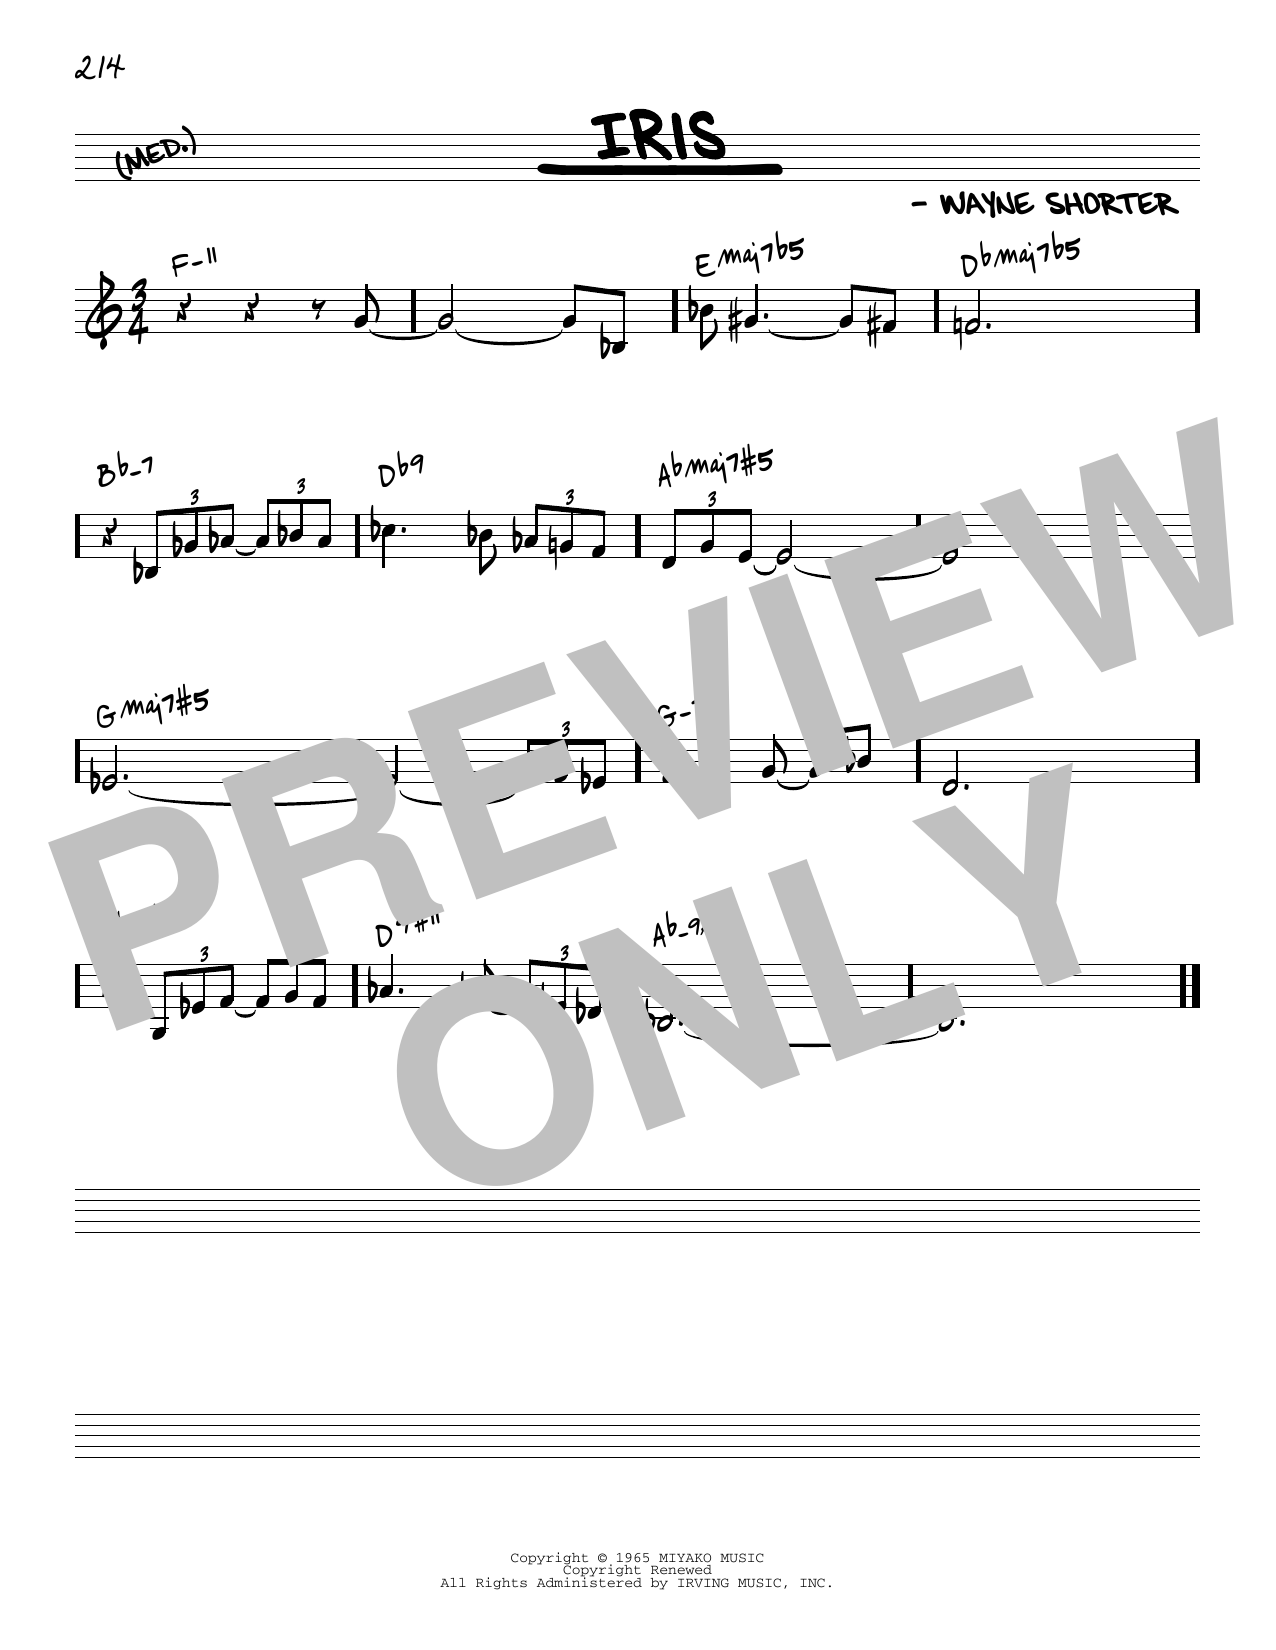 Wayne Shorter Iris [Reharmonized version] (arr. Jack Grassel) Sheet Music Notes & Chords for Real Book – Melody & Chords - Download or Print PDF